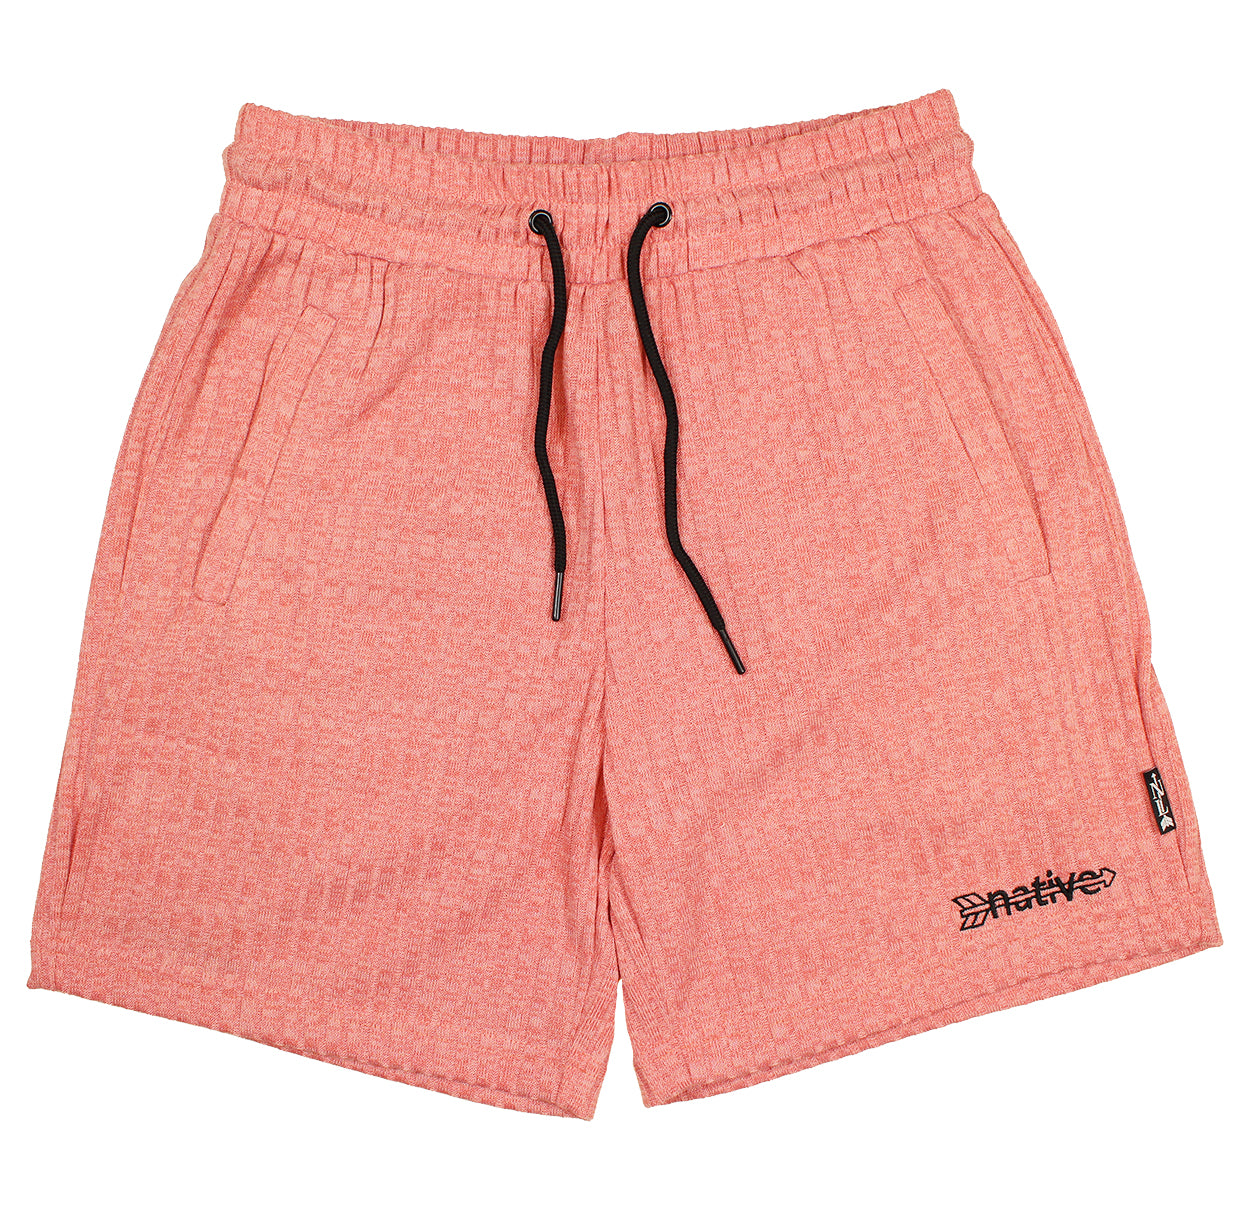 corduroy knit shorts in watermelon